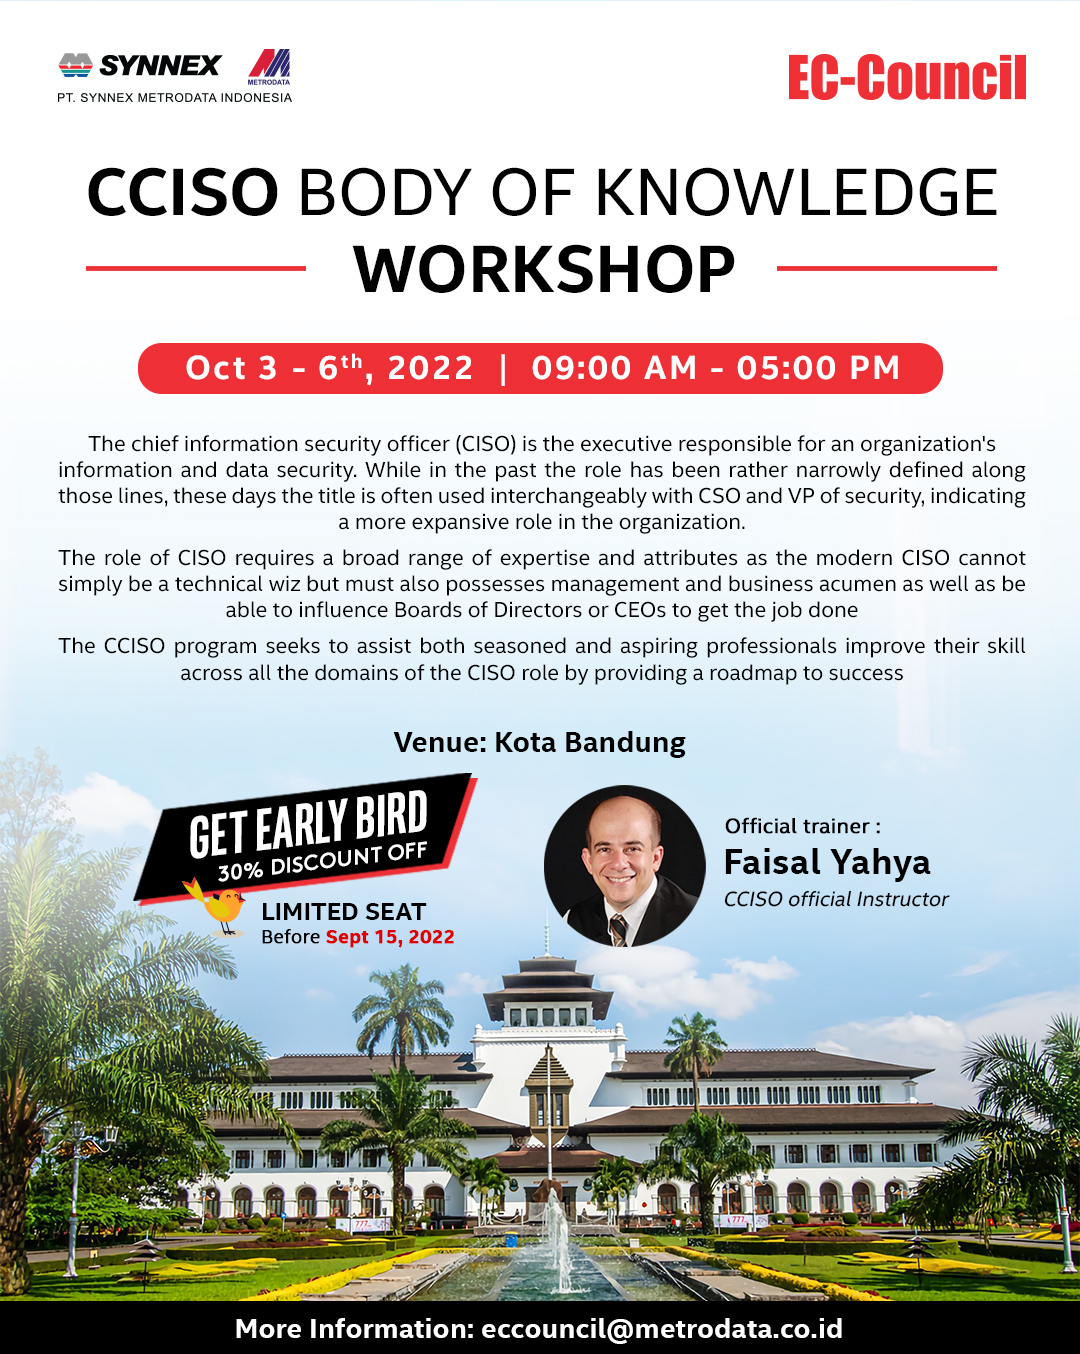 https://www.synnexmetrodata.com/wp-content/uploads/2022/08/EC-Council-CCISO-Body-of-Knowledge-Workshop-Oct-3-6-Bandung.jpg